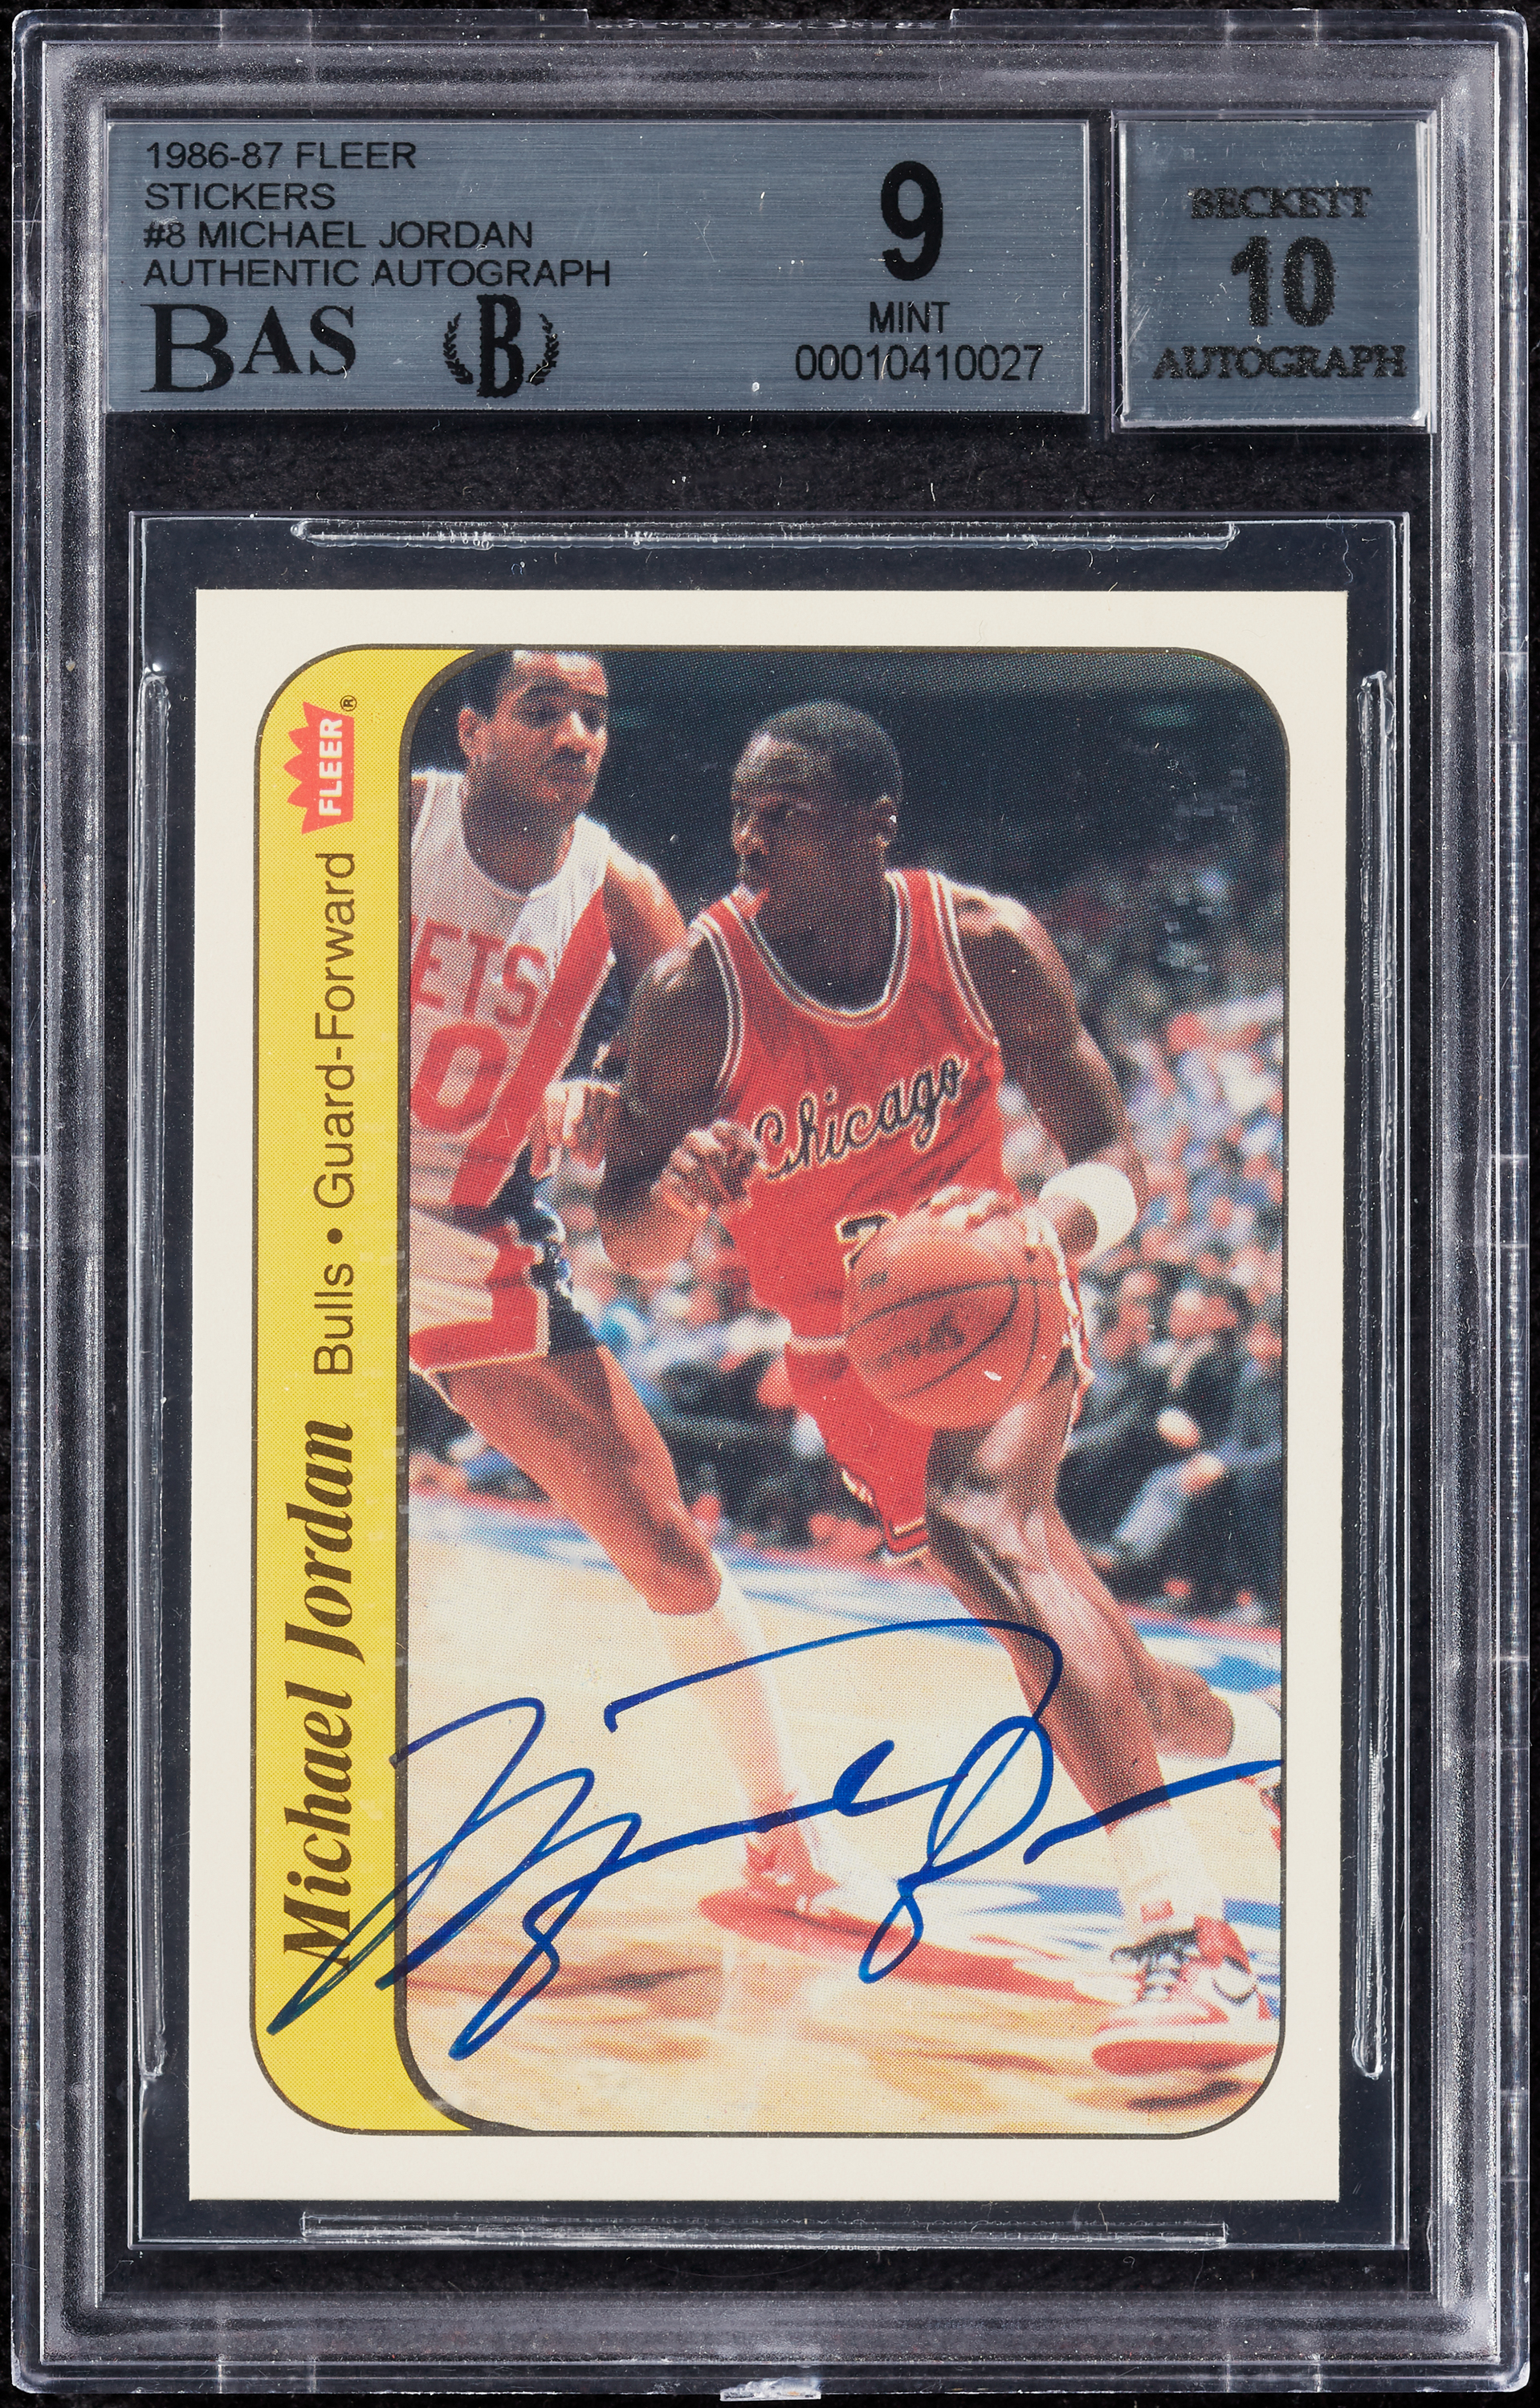 86-87 Fleer Michael Jordan Rookie Card Autographed - Michael